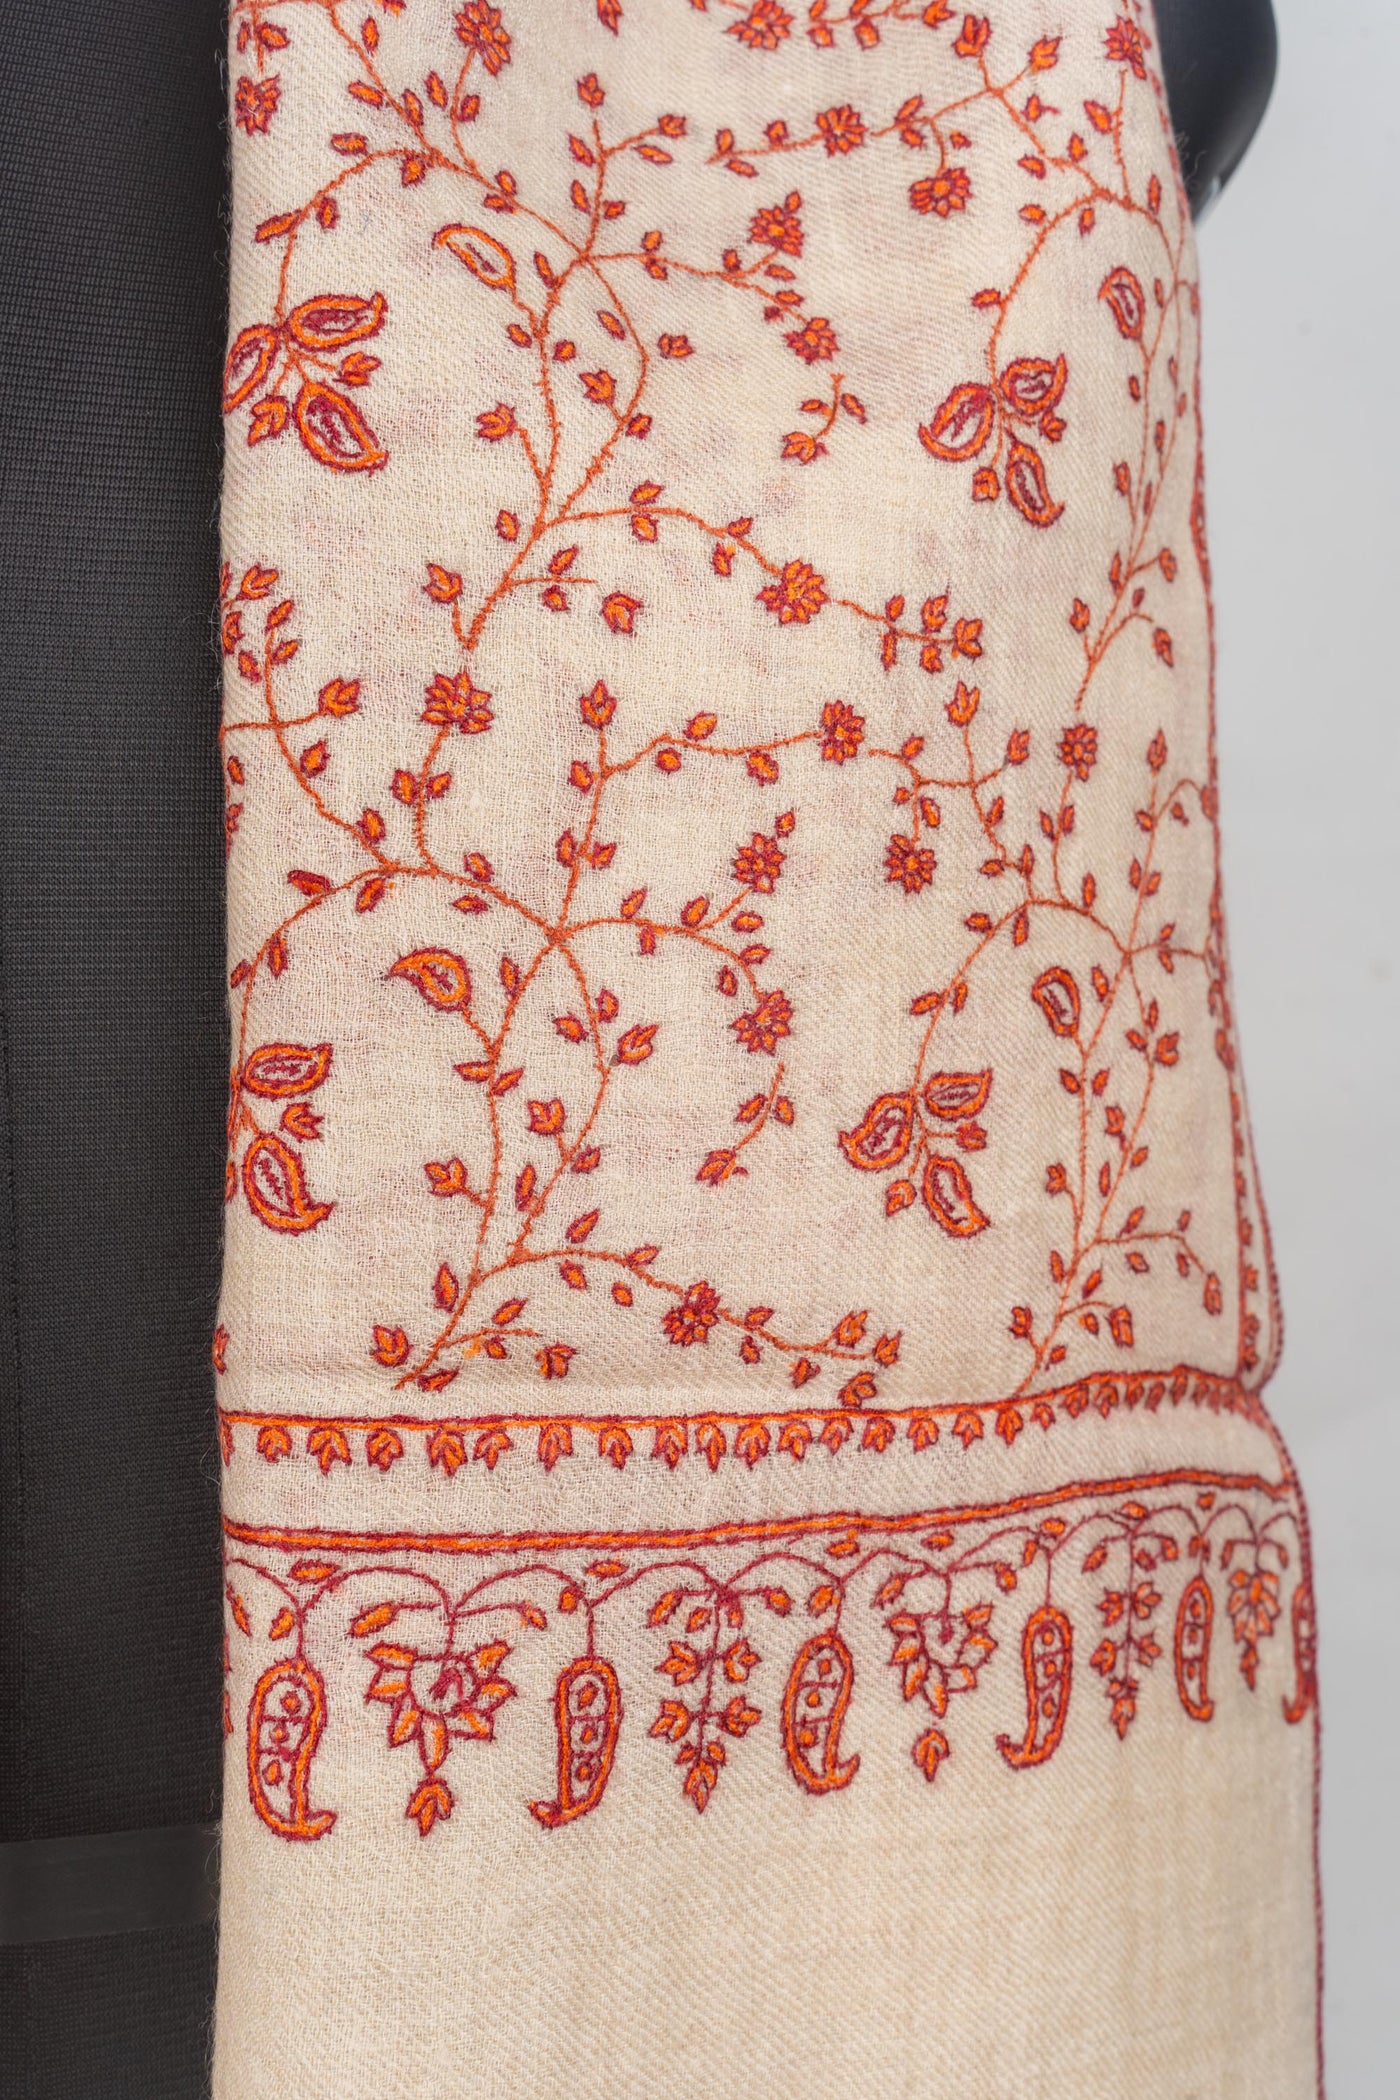 Gul-e-Bahar Sozni Hand Embroidery Pashmina Scarf